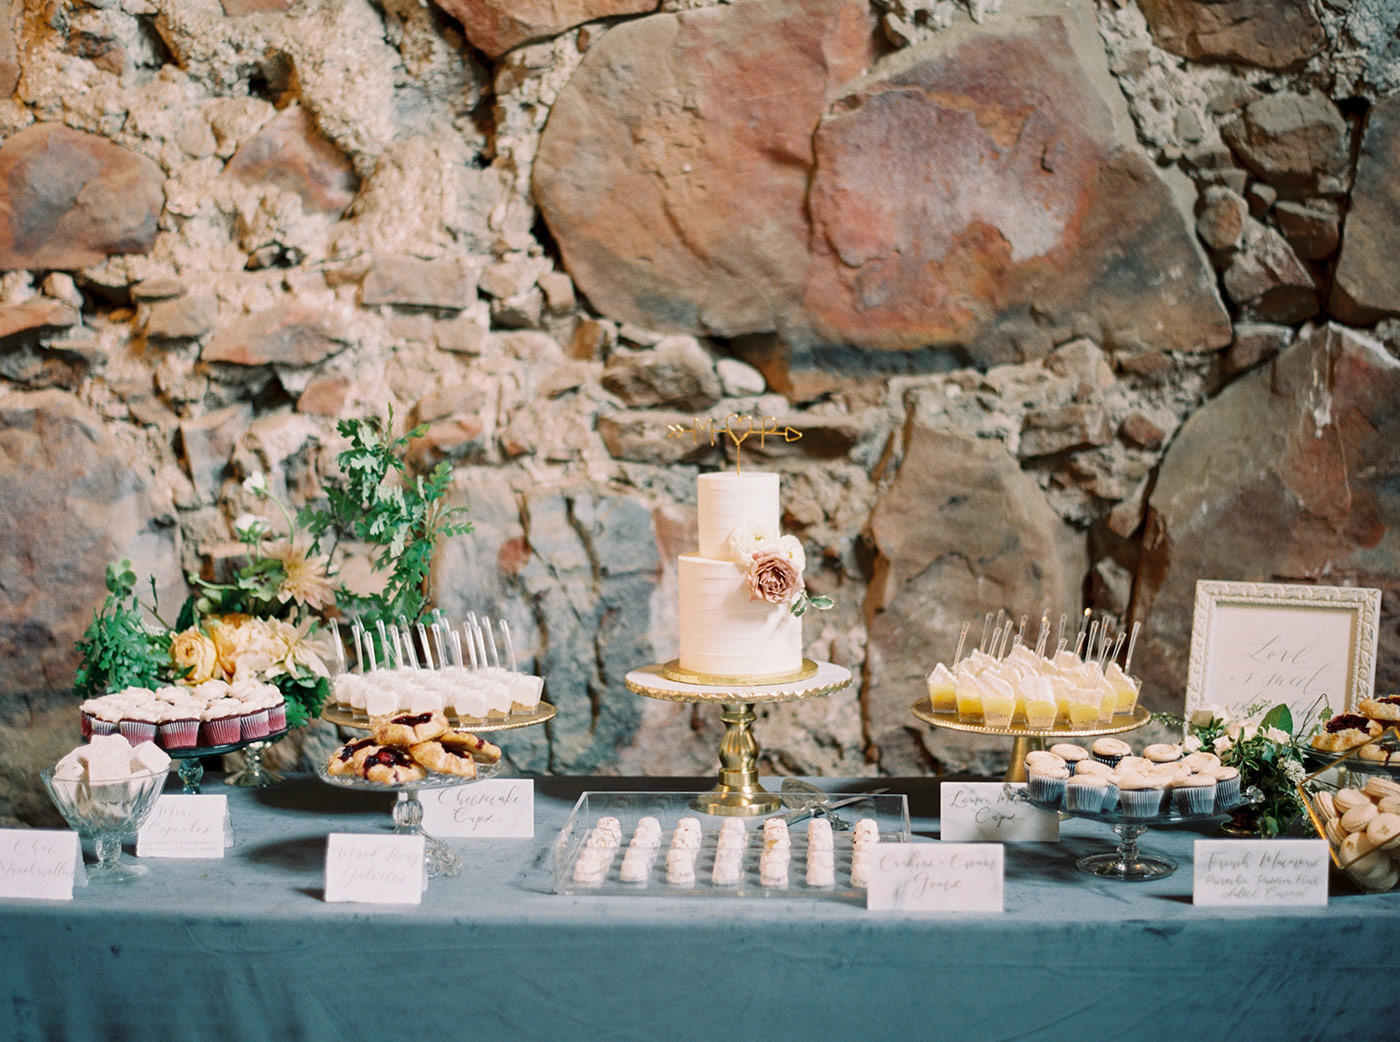 Elegant Wedding Cake by Paper Cake Events